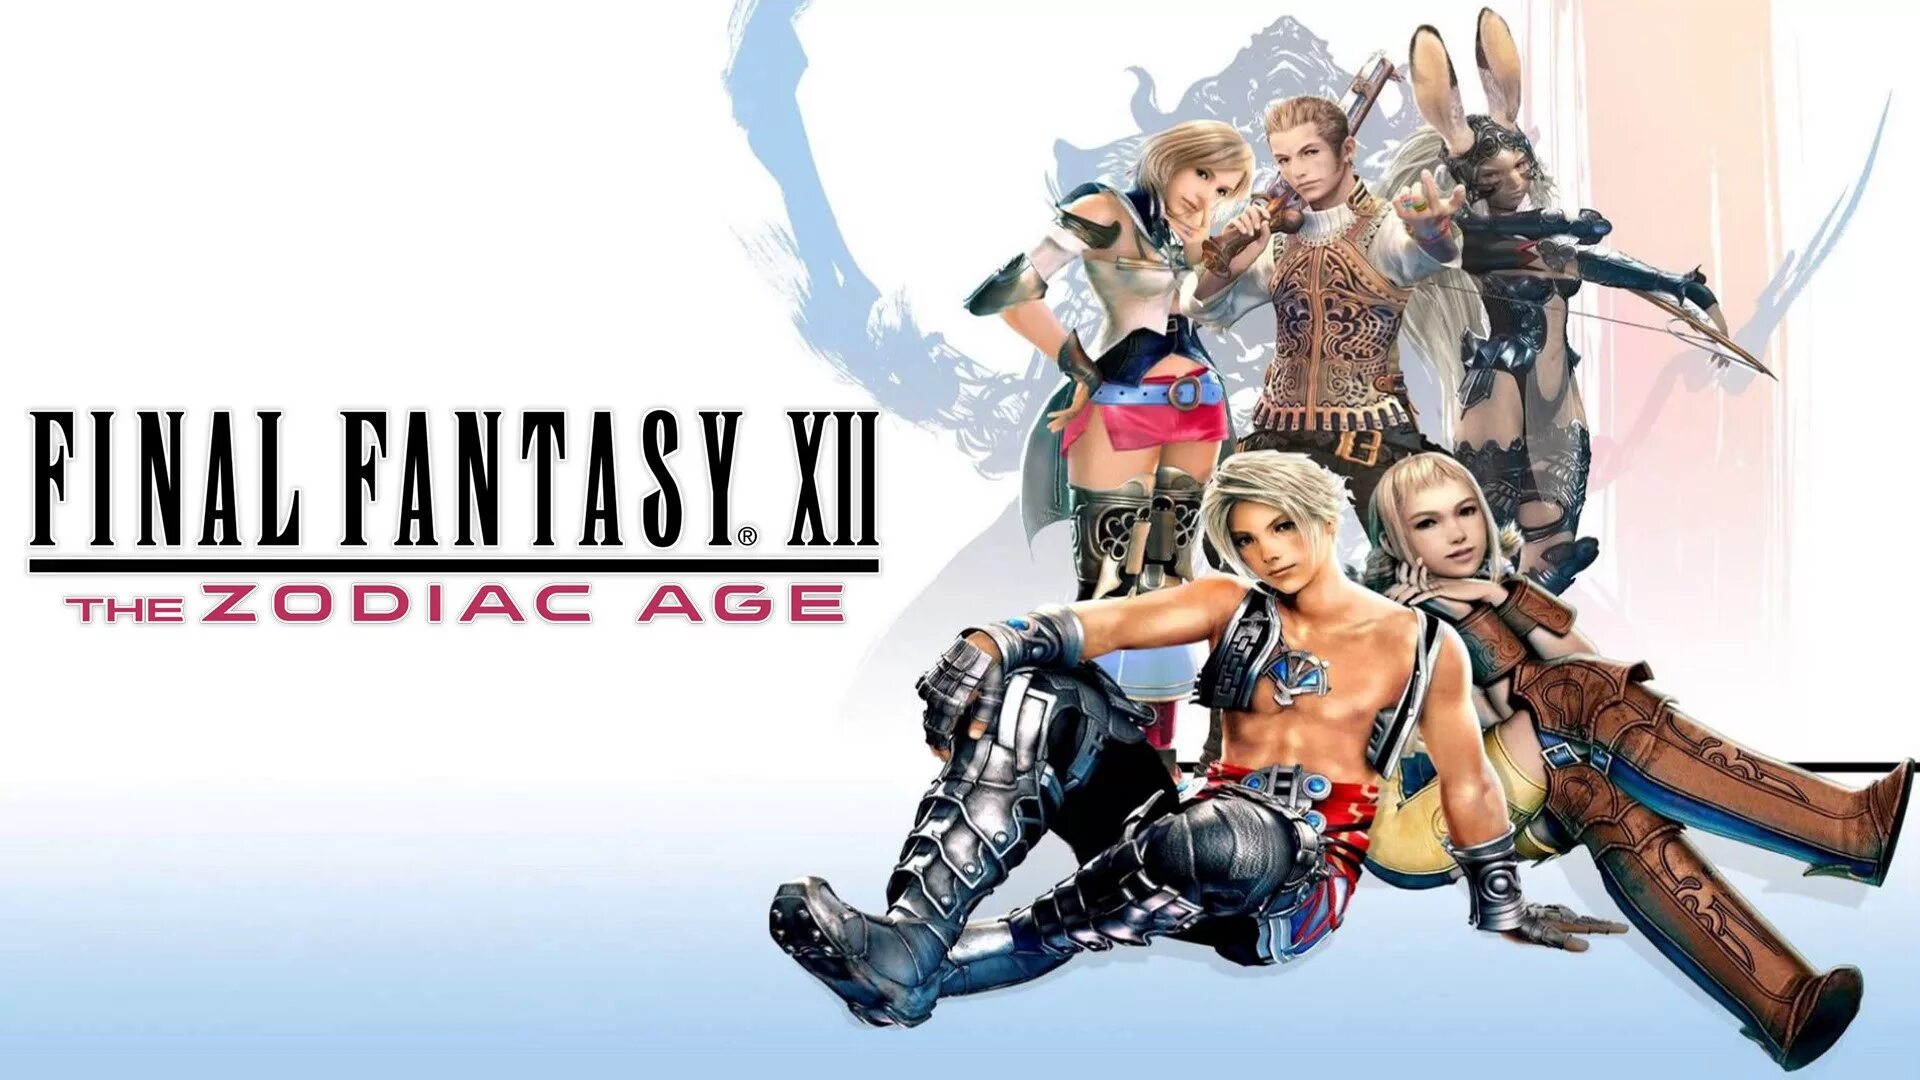 12 the zodiac age. Ff12 Zodiac age. Финал фэнтези 12 Зодиак. Final Fantasy XII: the Zodiac age. Ff12.